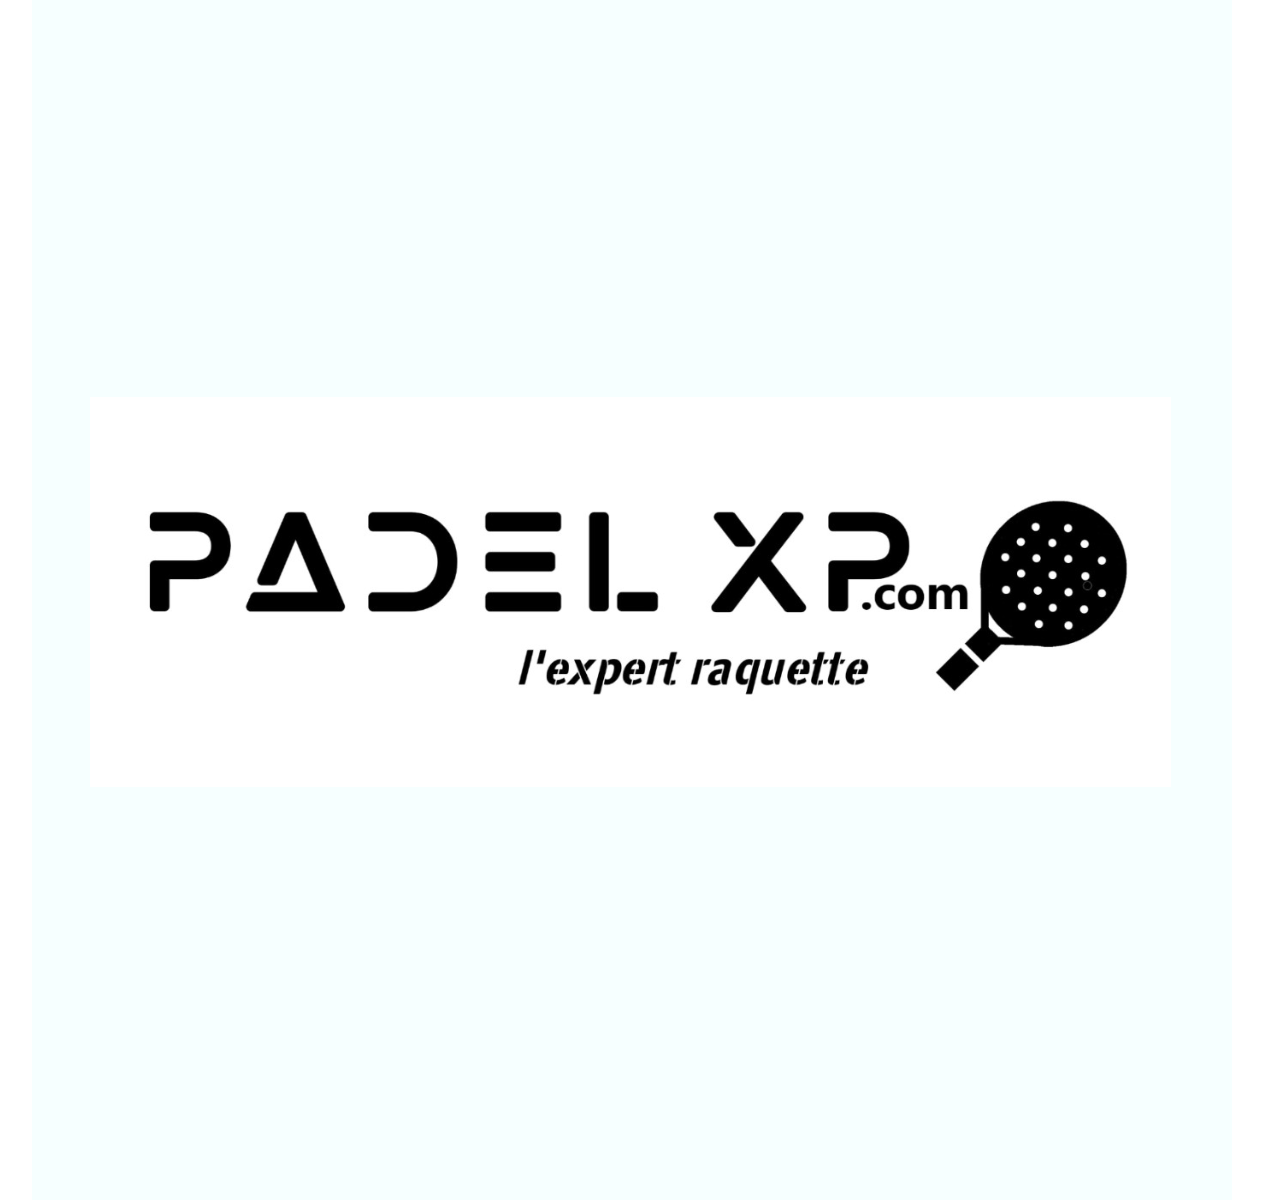 Logotipo_PadelXPcom3